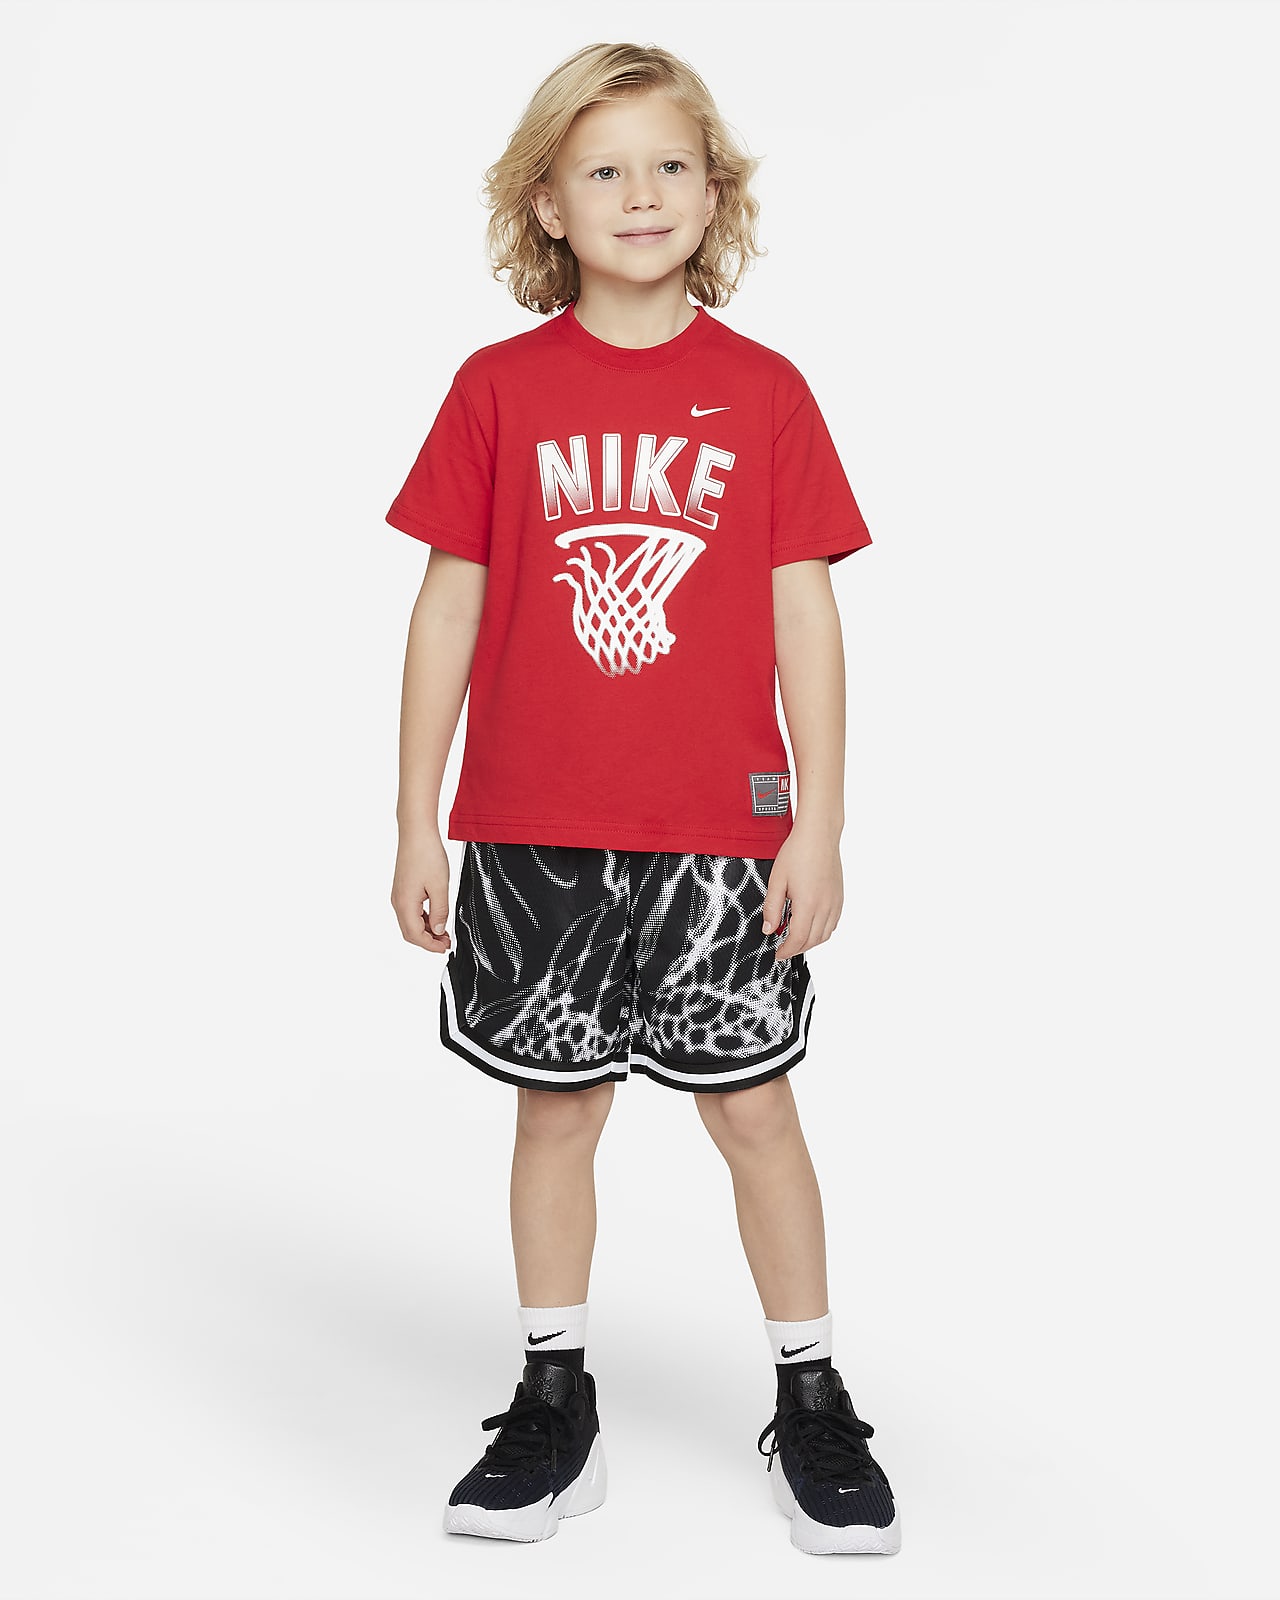 Nike Culture of Basketball Little Kids' Dri-FIT Mesh Shorts Set